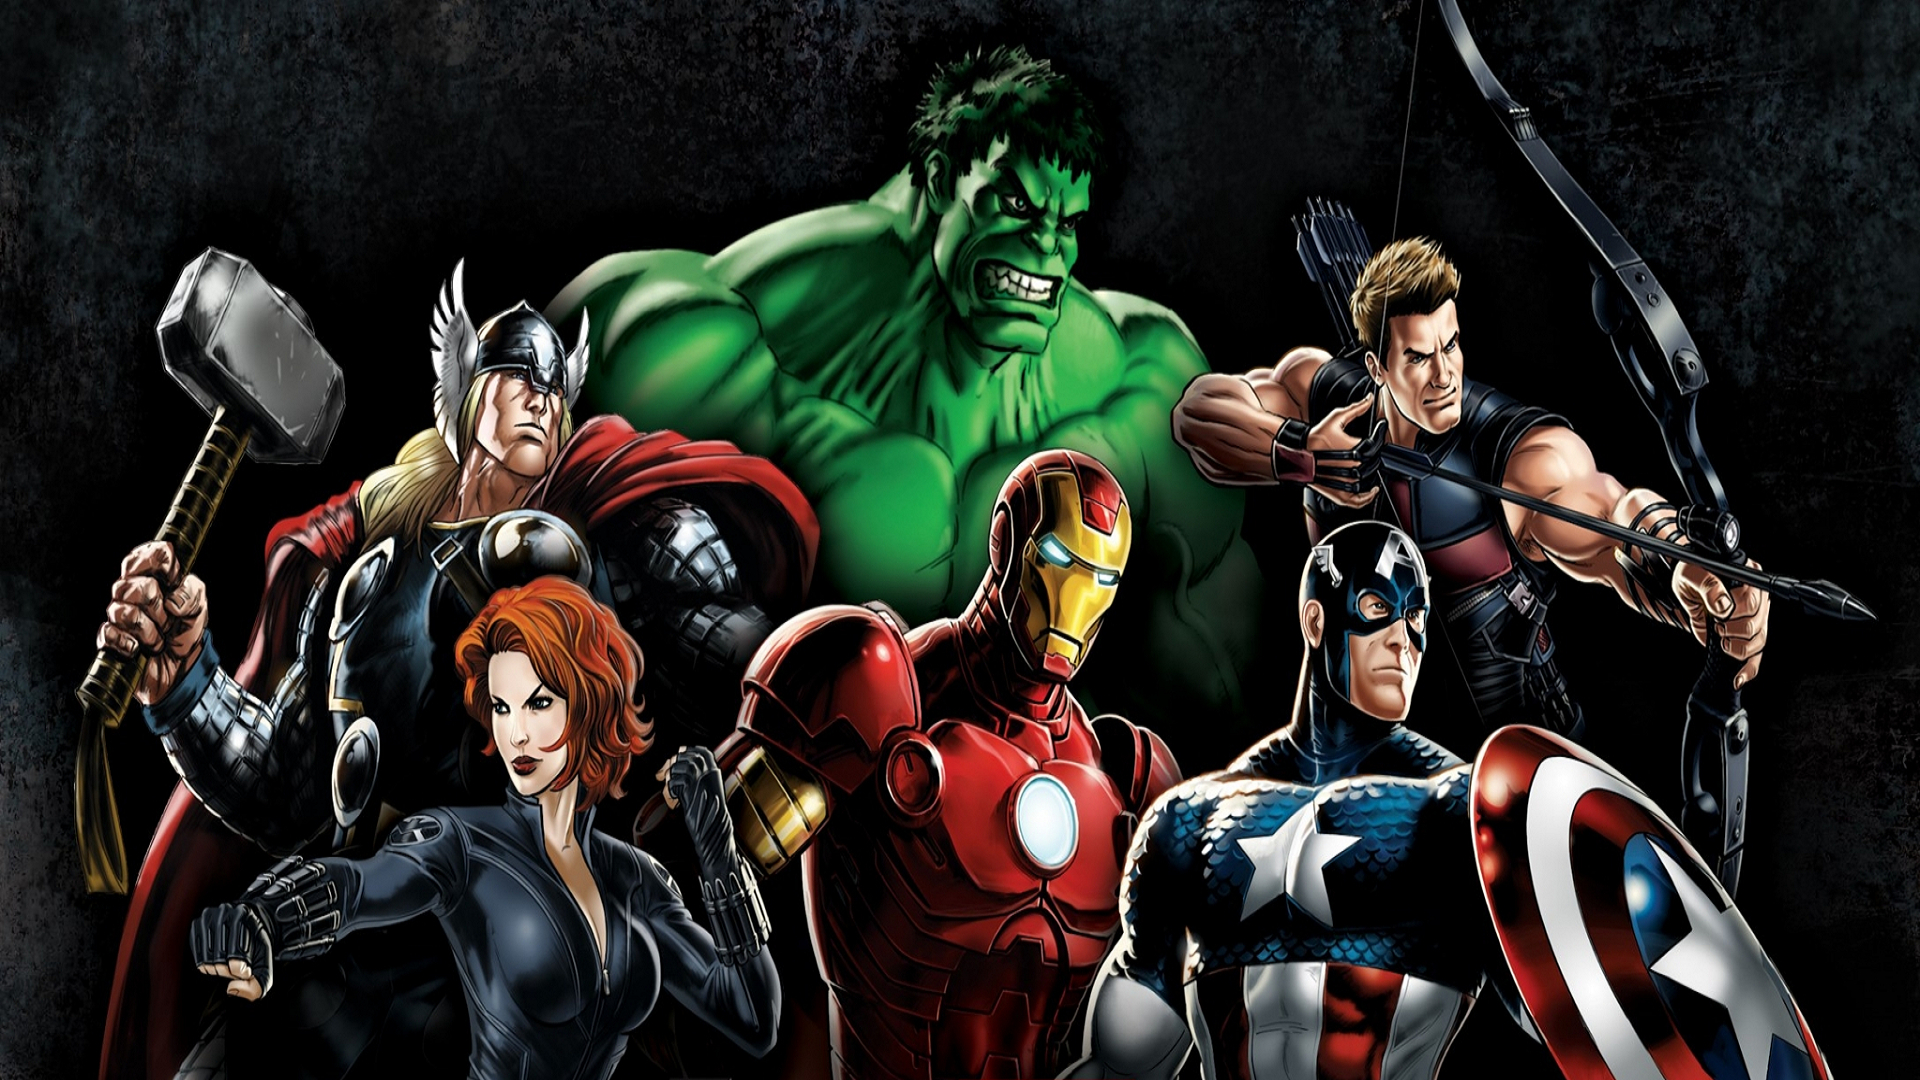 Avengers: United Battle Force